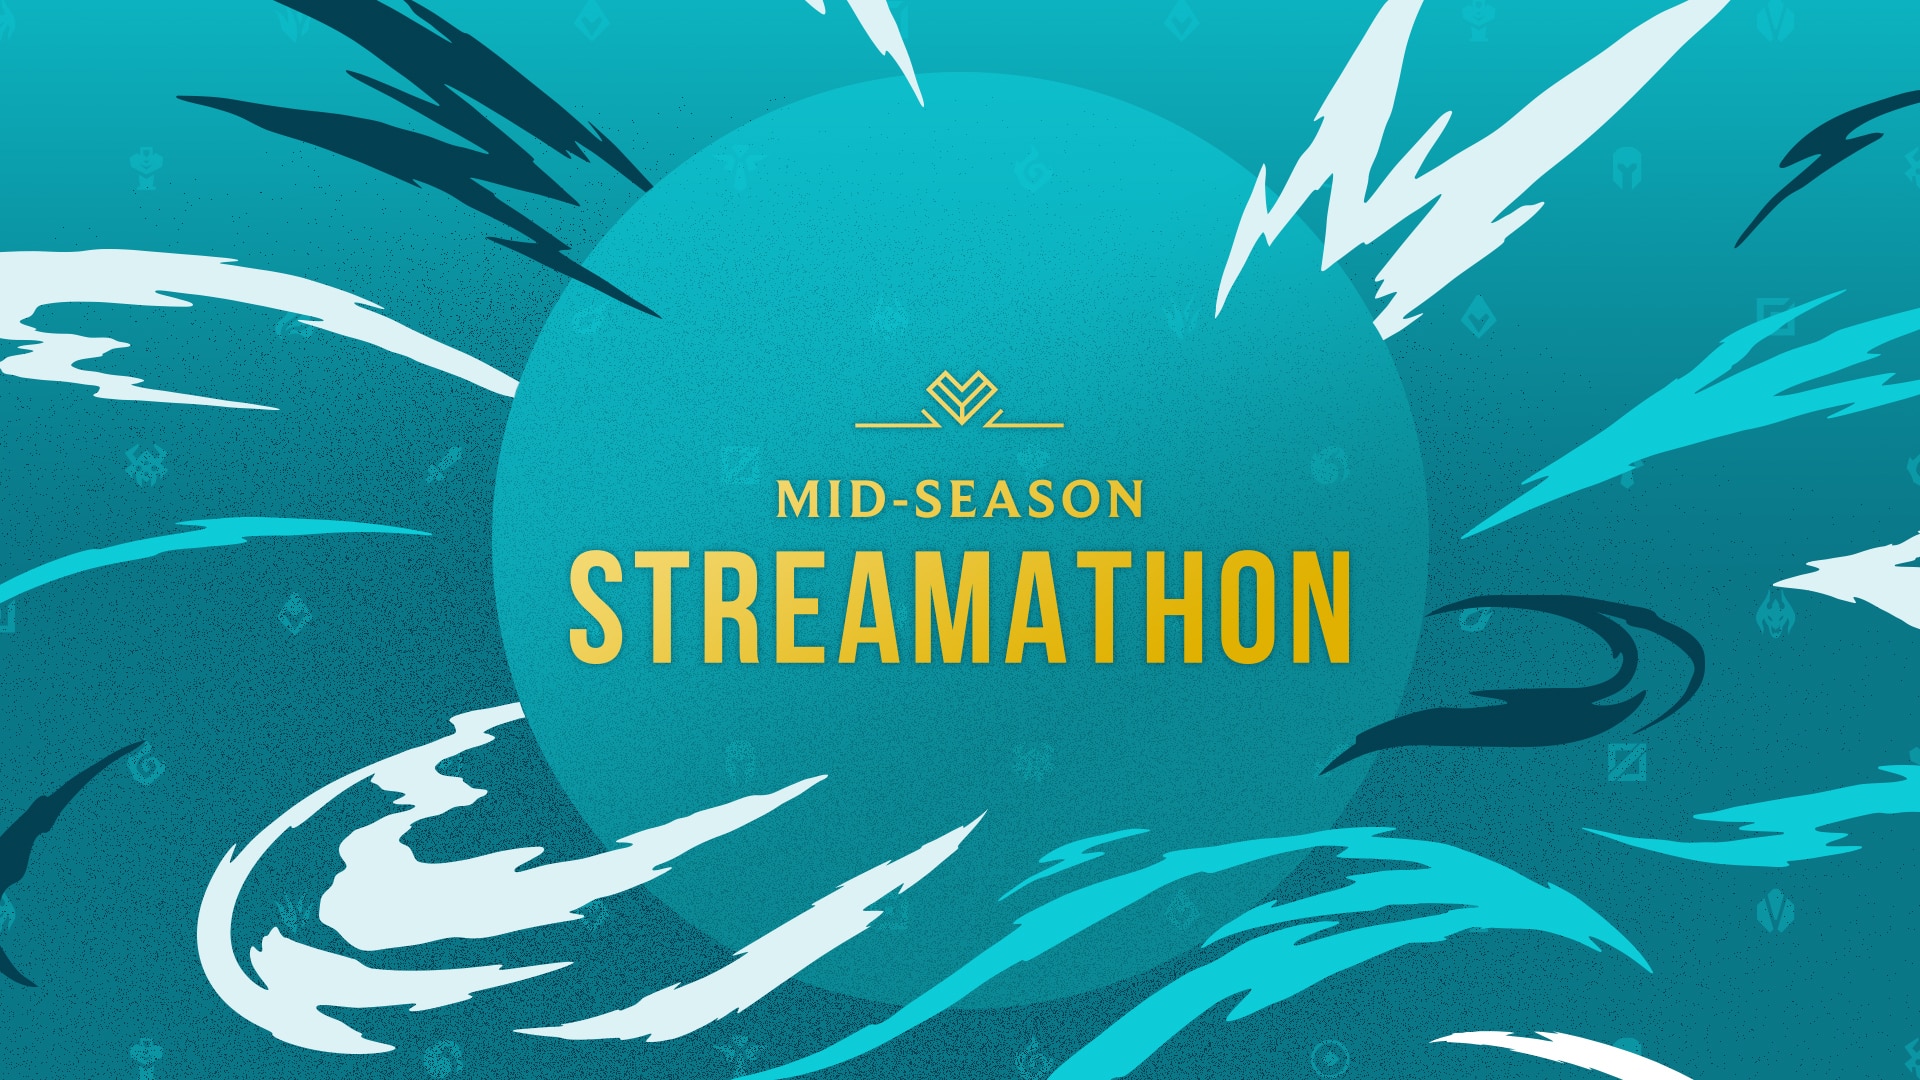 League of Legends Mid-Season Streamathon 2020